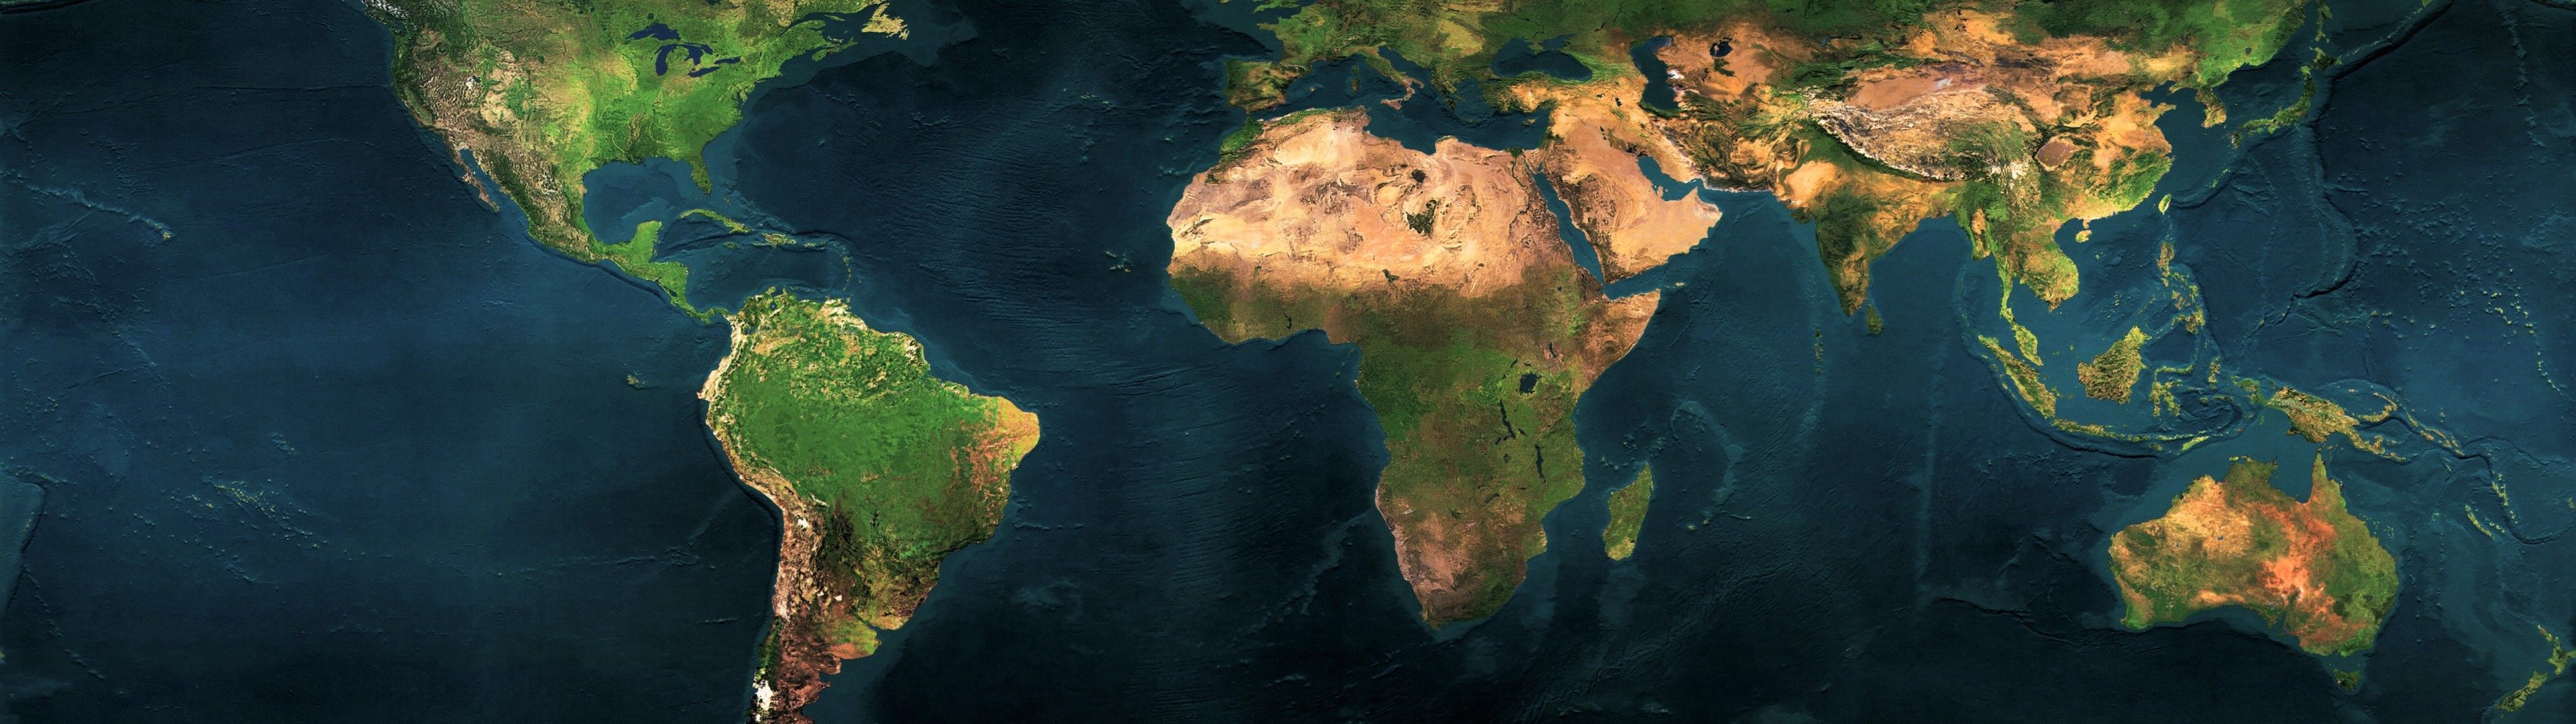 World Map Wallpaper Earth Dual Monitor